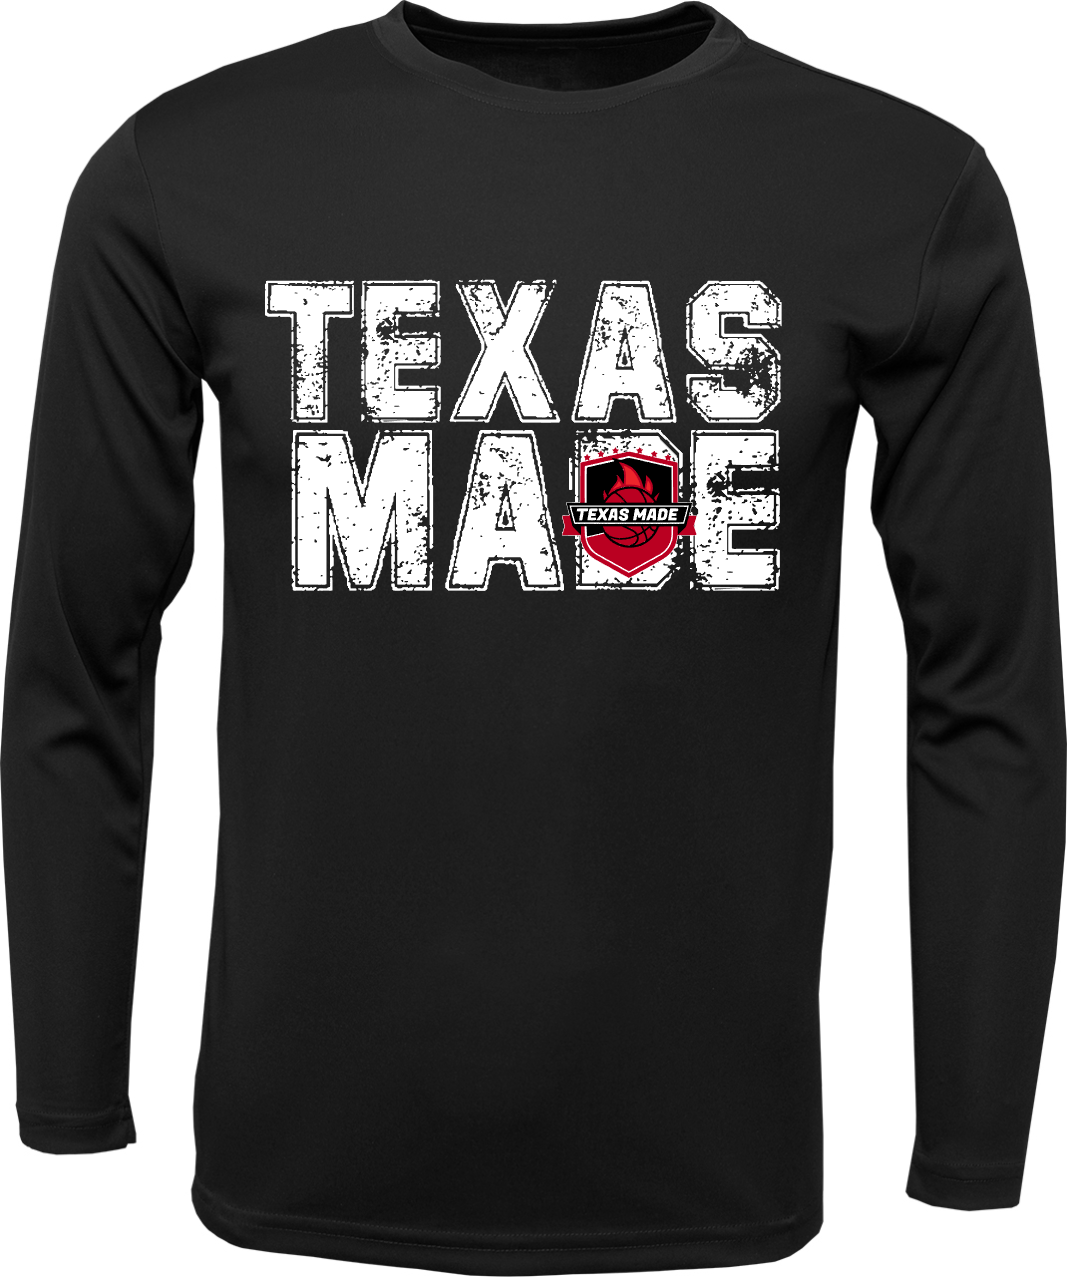 Texas Made- TEXAS MADE -Black Performance Longsleeve Tee